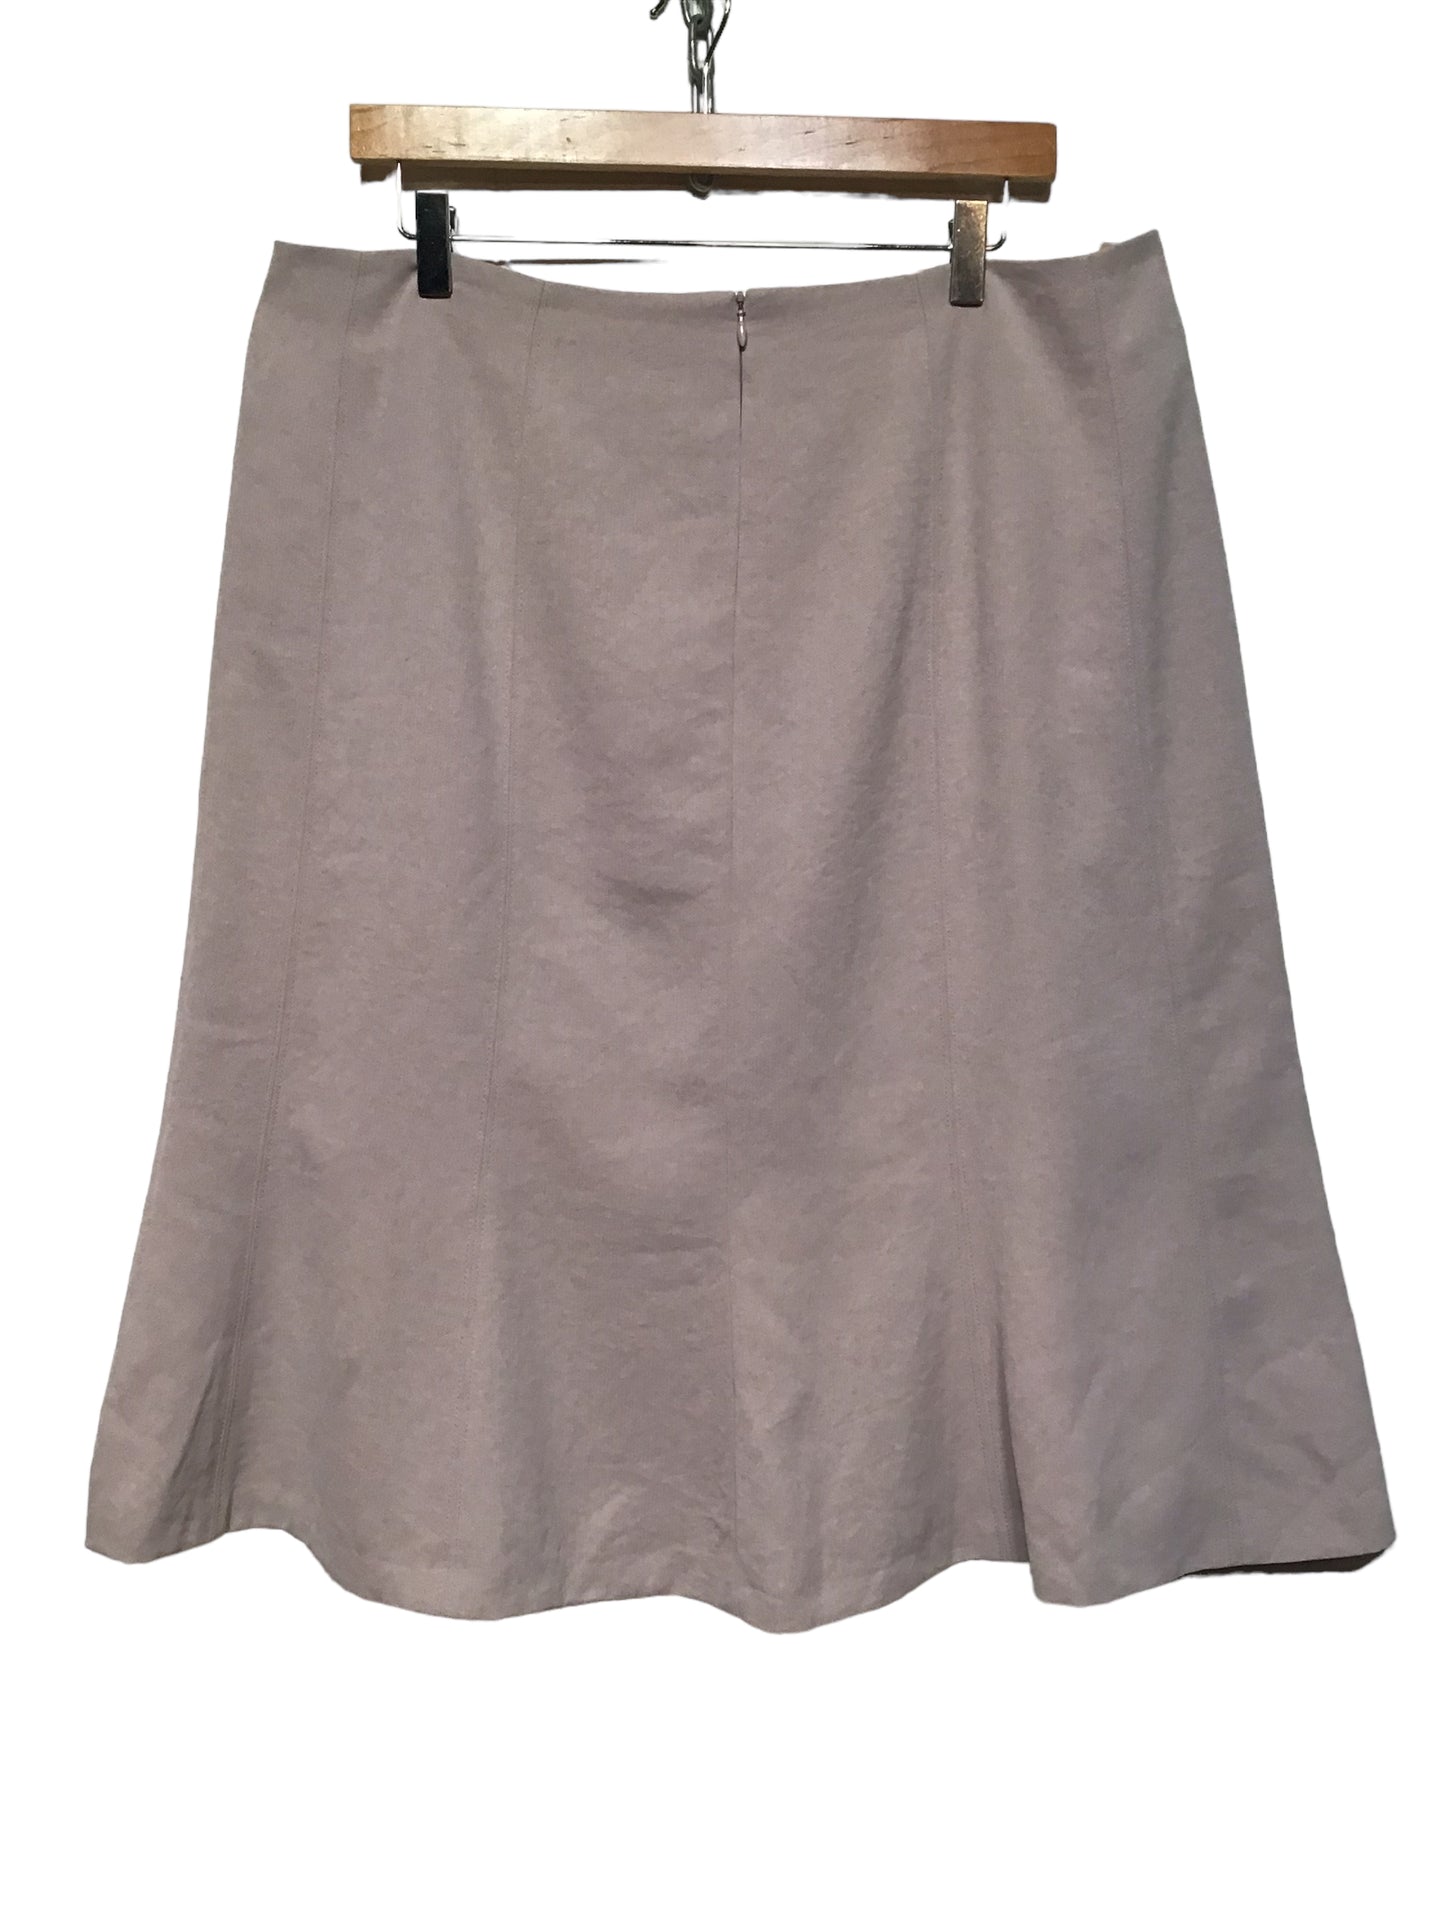 Devernois Skirt (Size L)